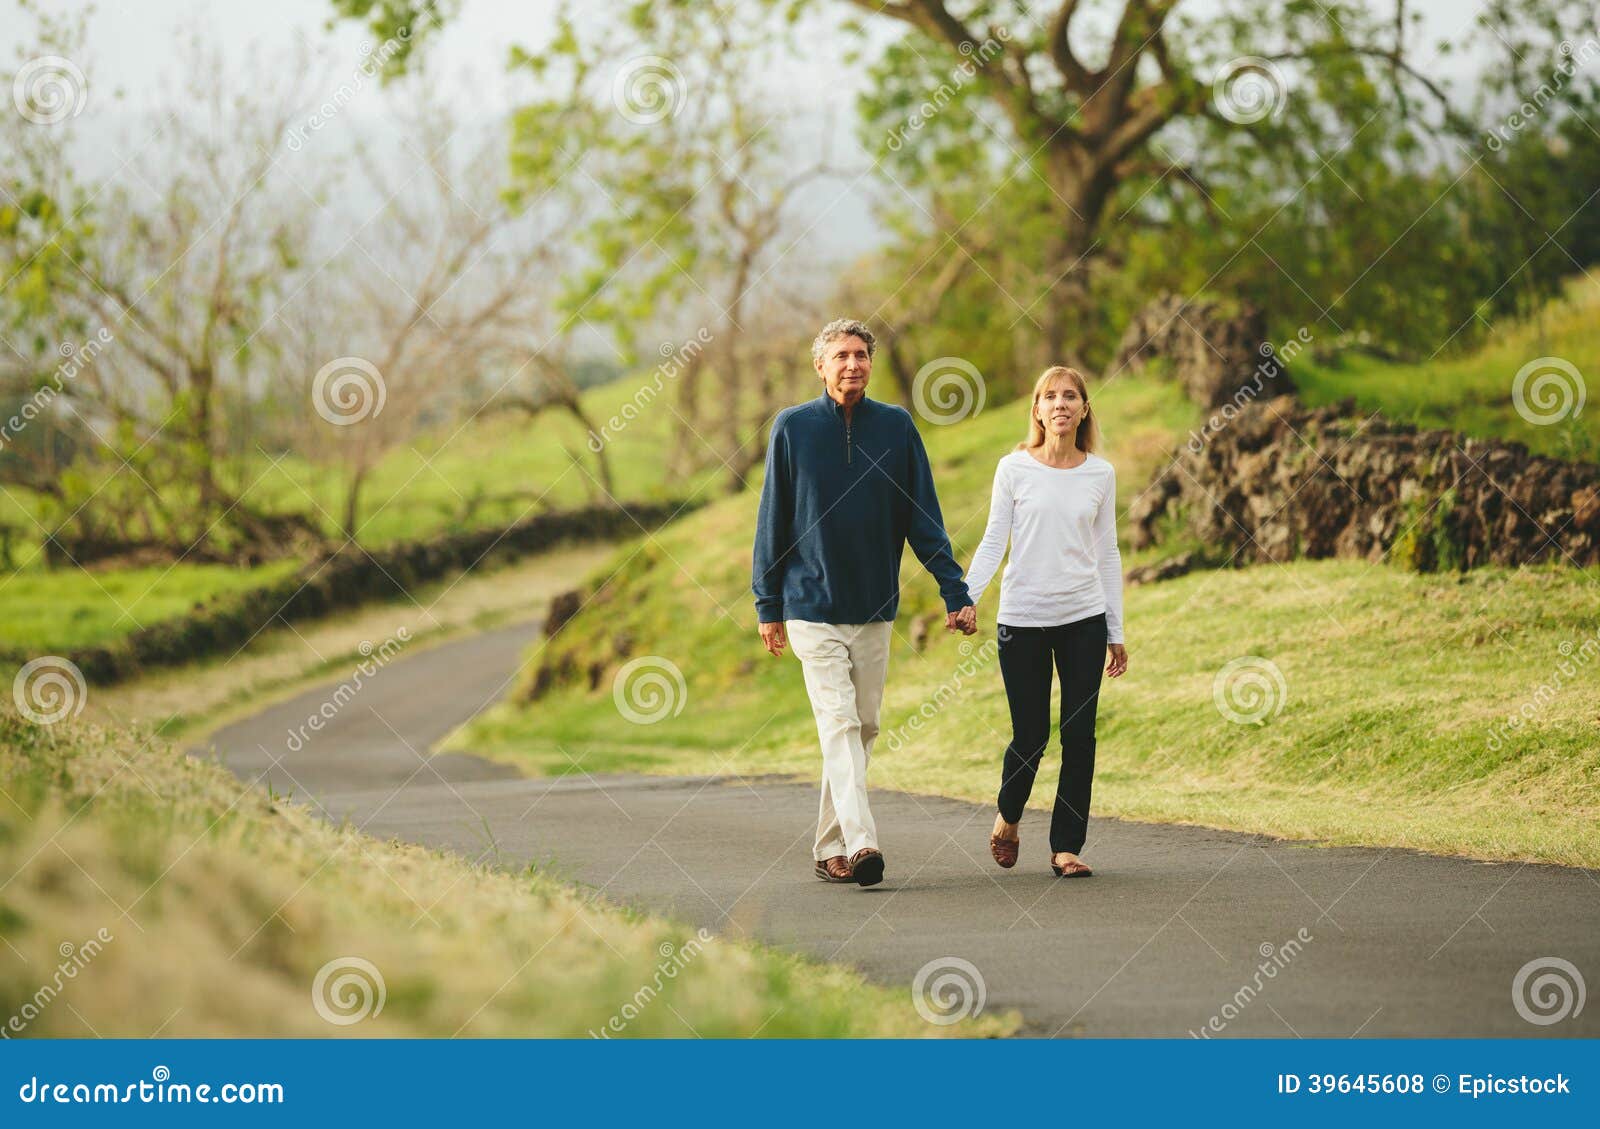 happy loving middle aged couple walking